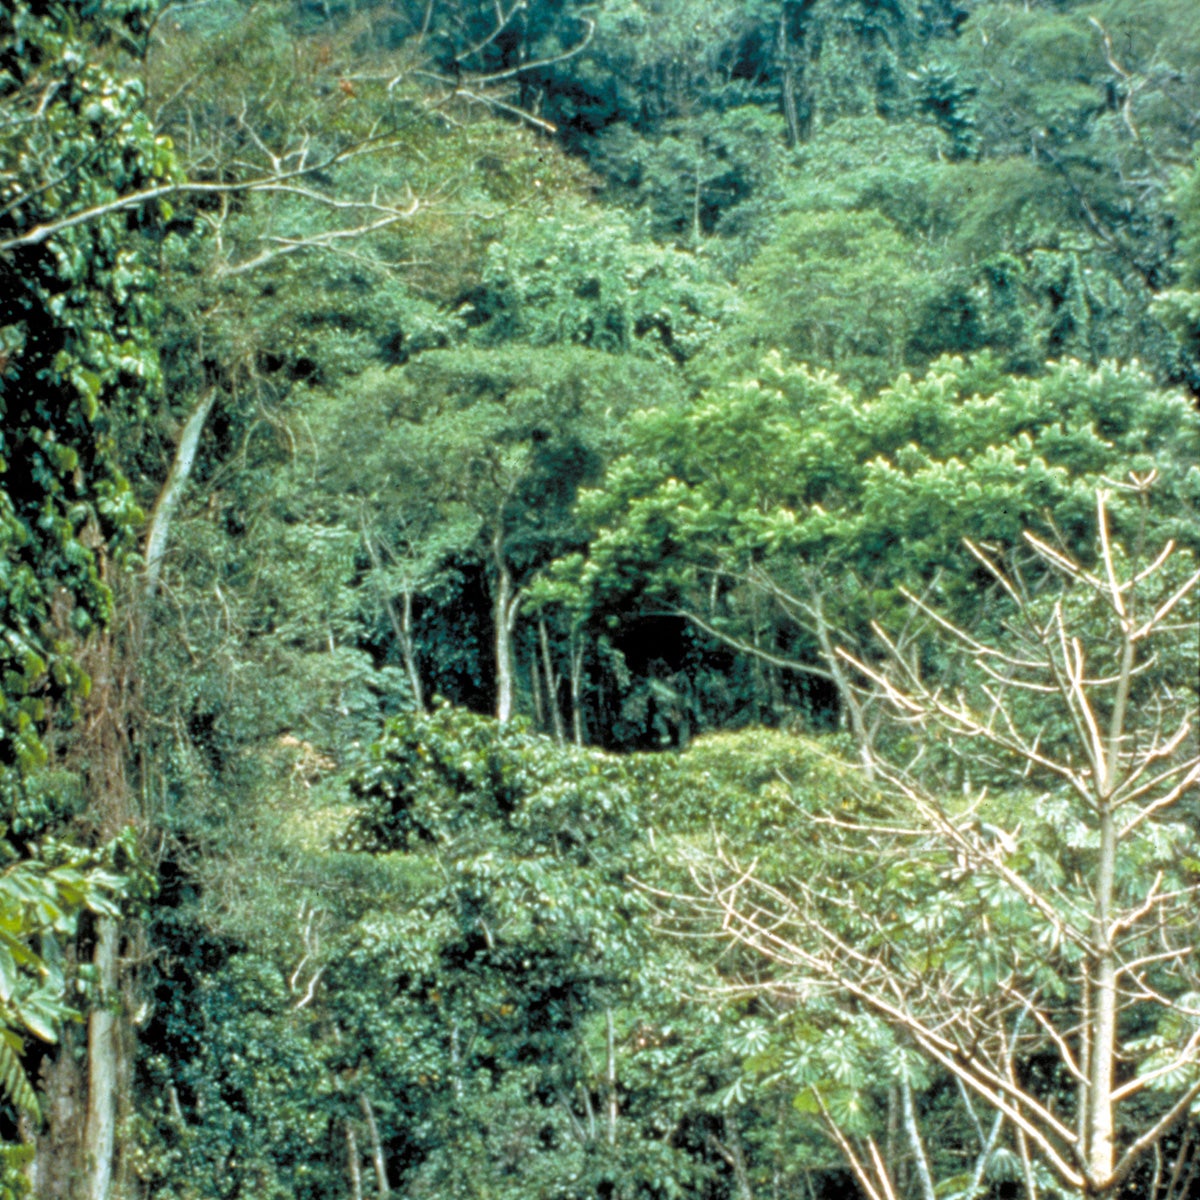 dense, lush forest